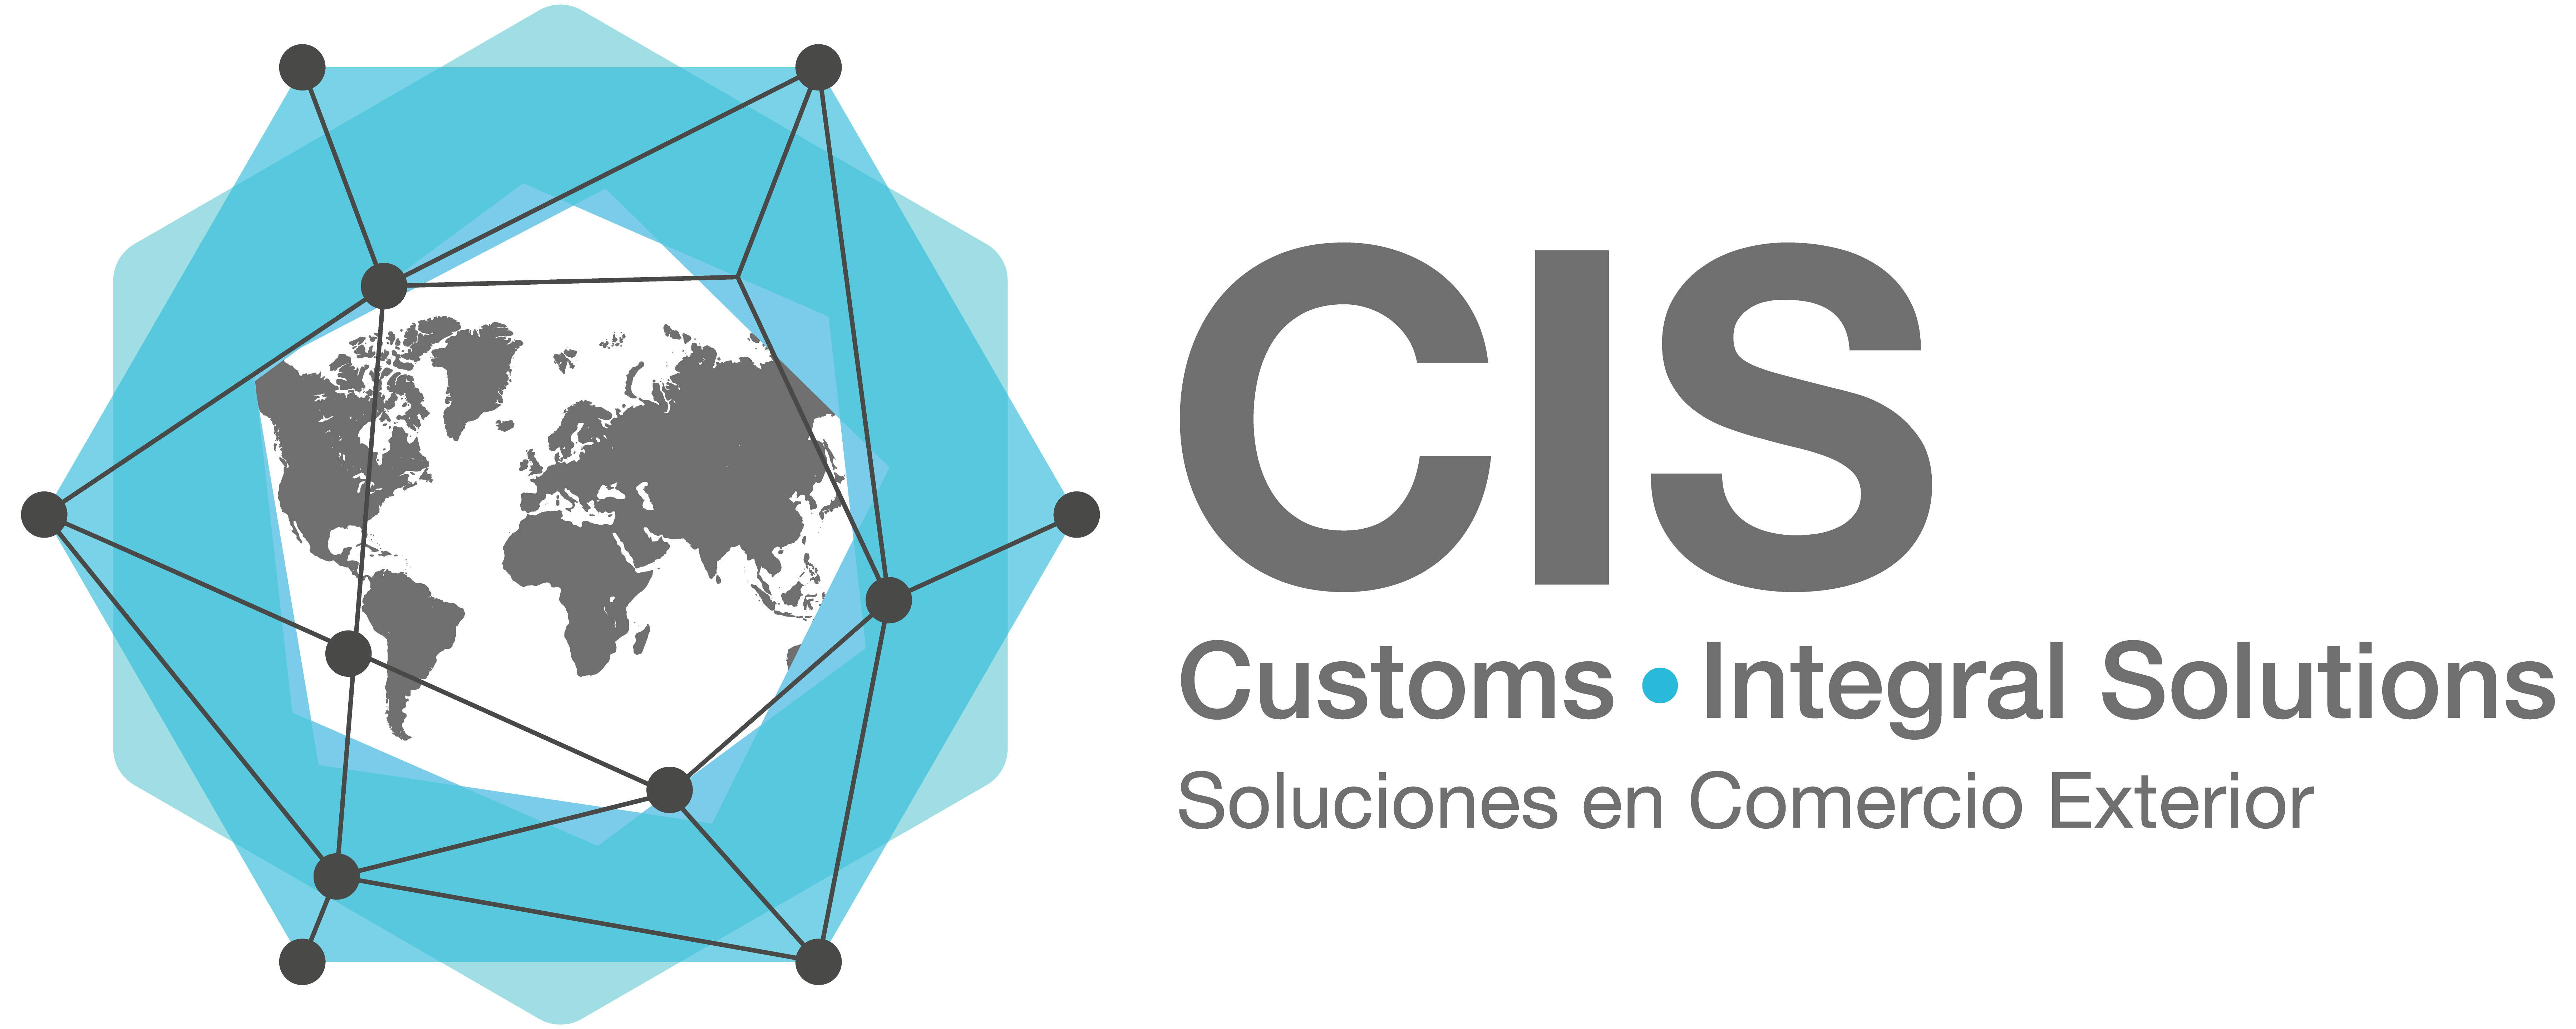 CIS/Customs Integral Solutions